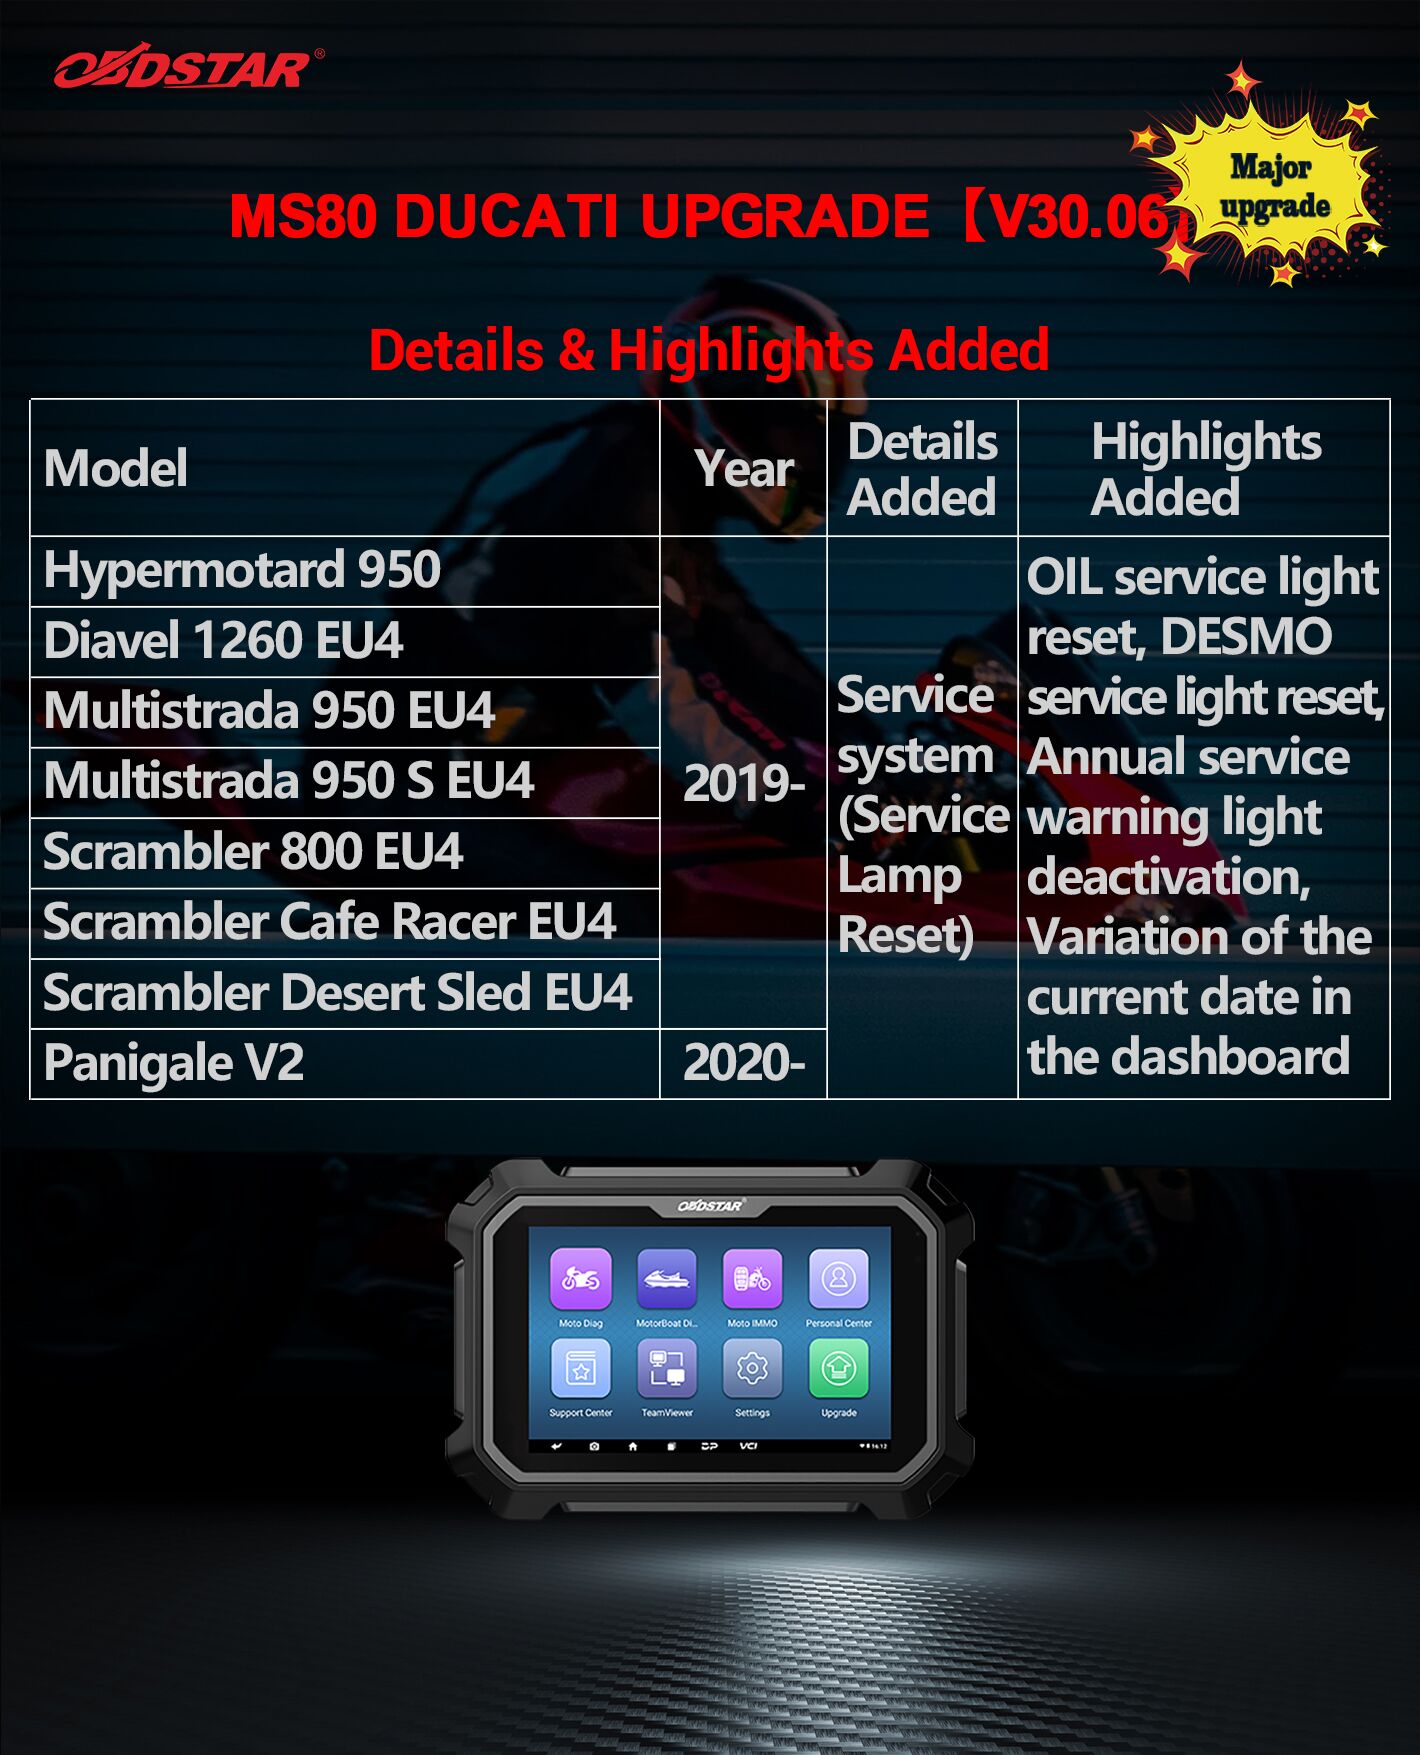 MS80 ducati upgrade